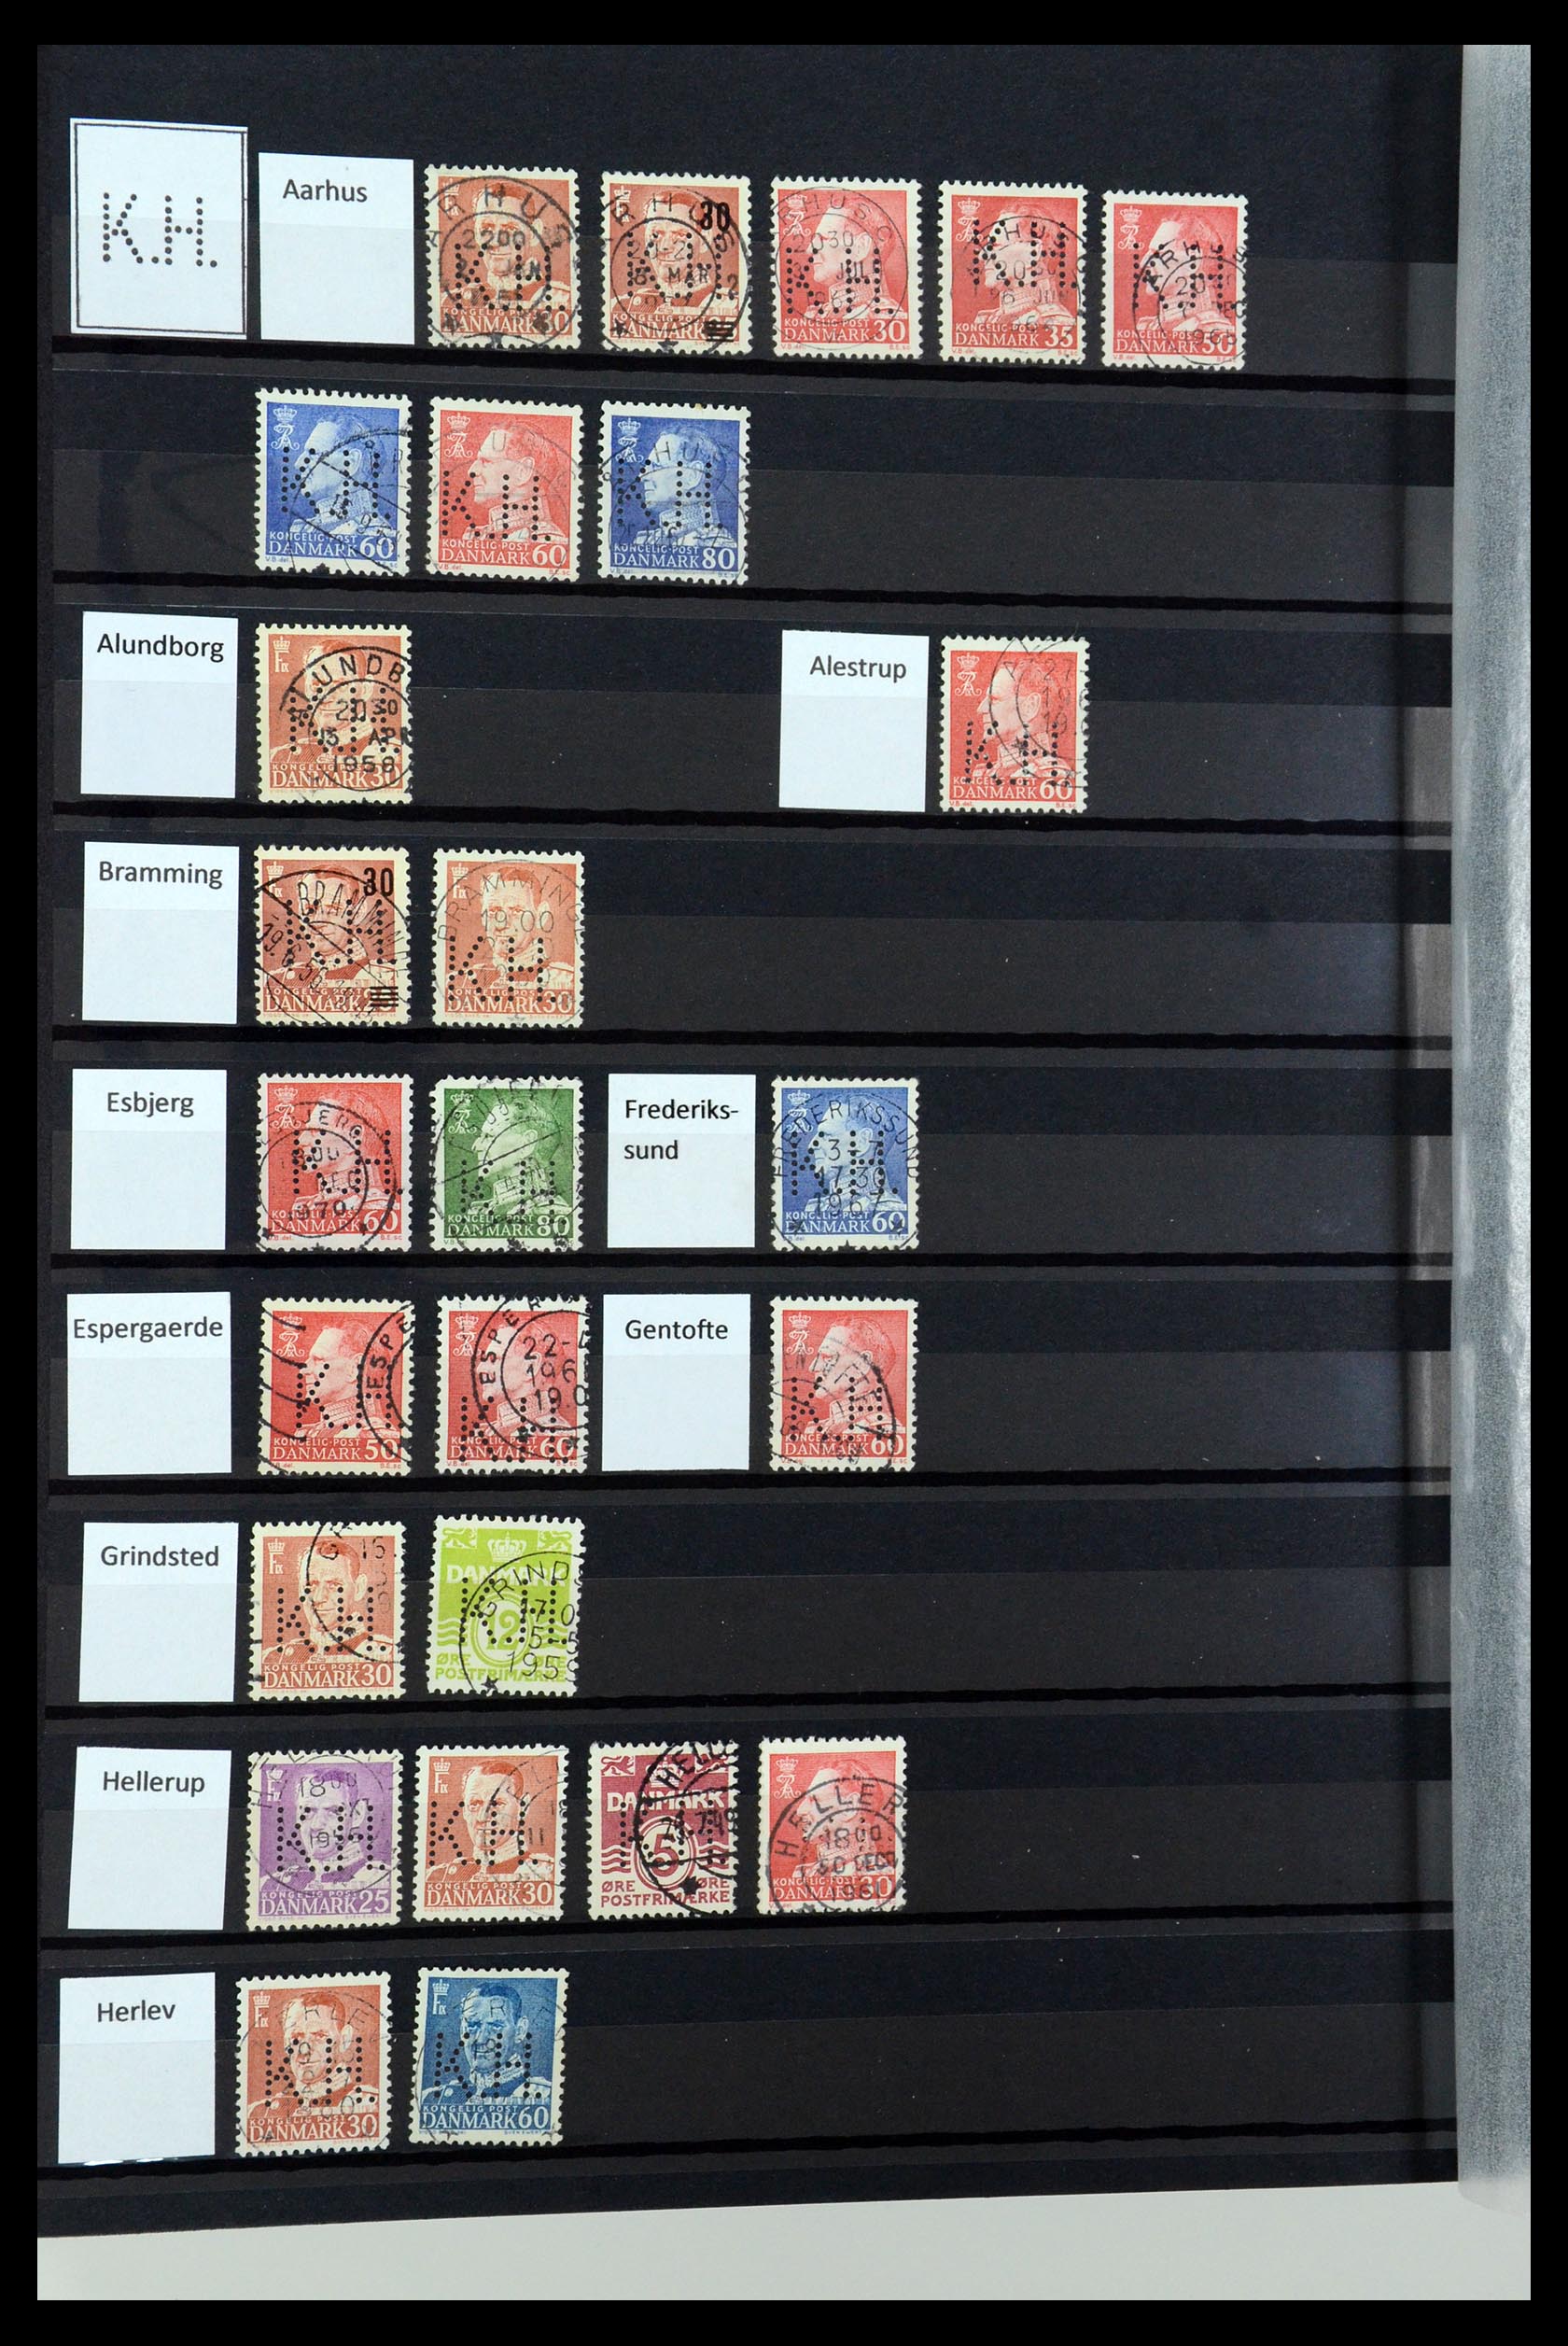 36396 083 - Stamp collection 36396 Denmark perfins.